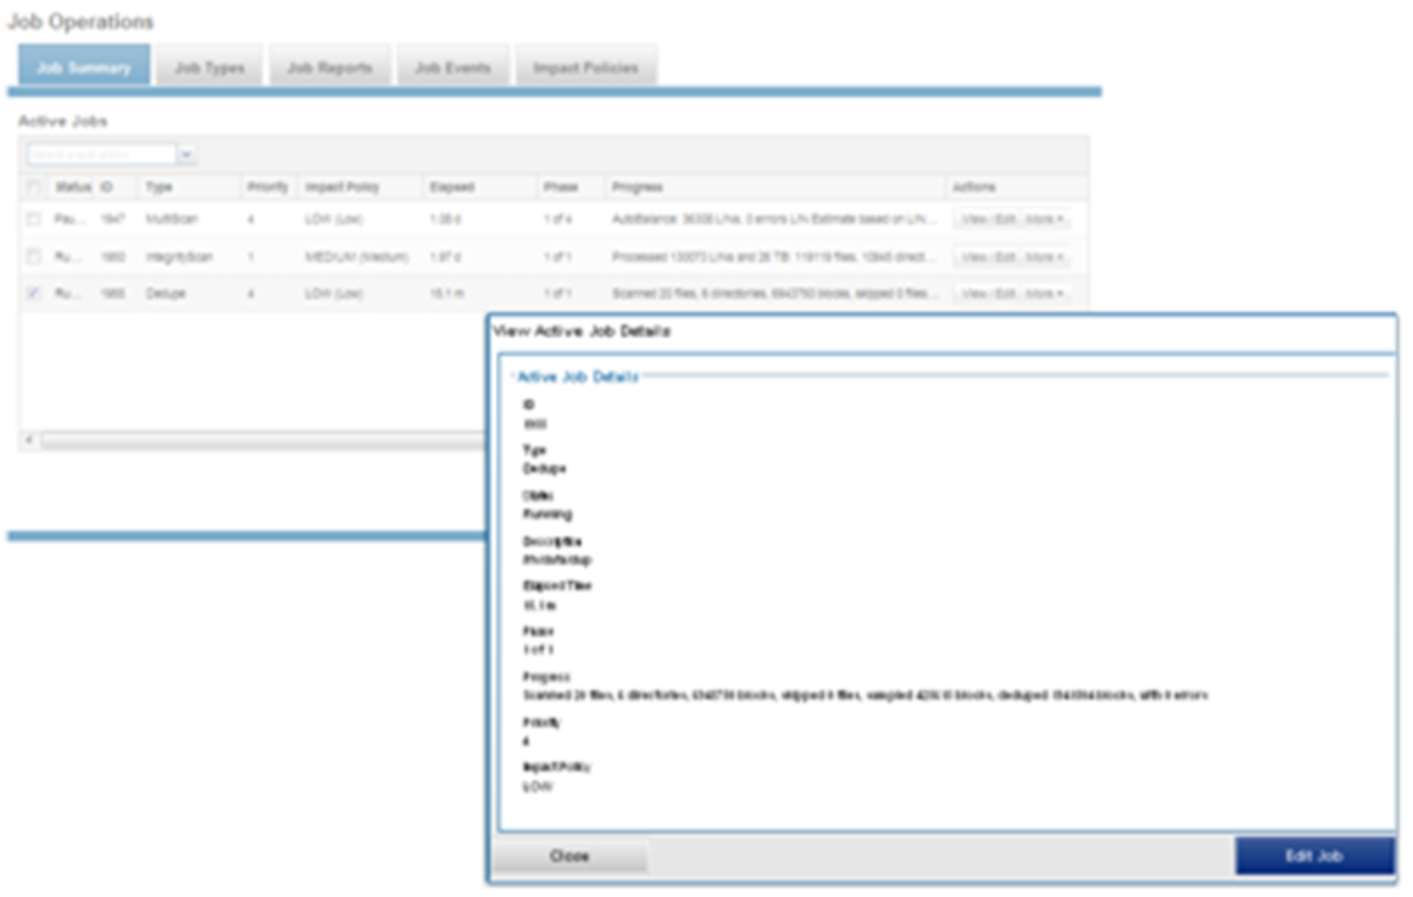 WebUI screenshot showing an example of an active job status update.